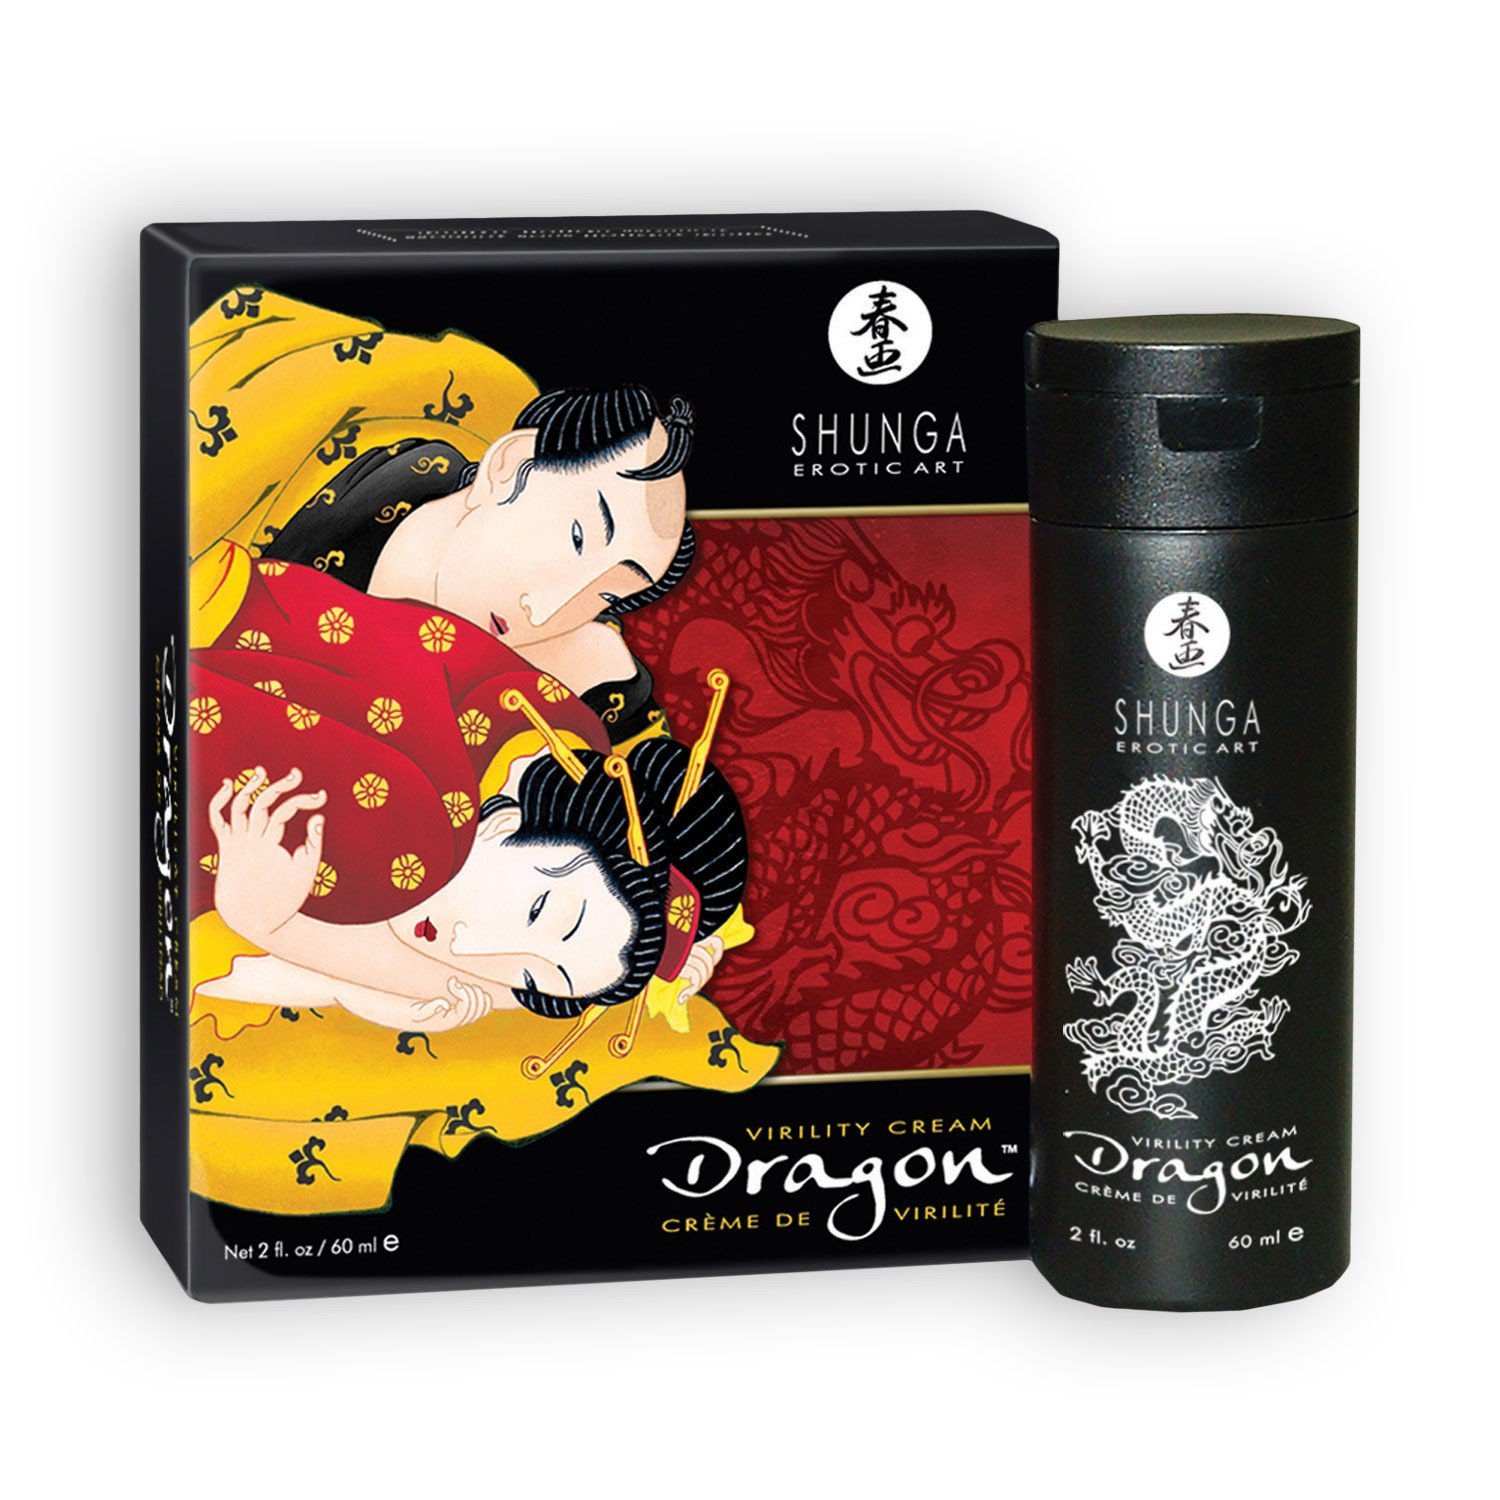 shunga-dragon-virility-60ml-pharma-shunga-erotic-art